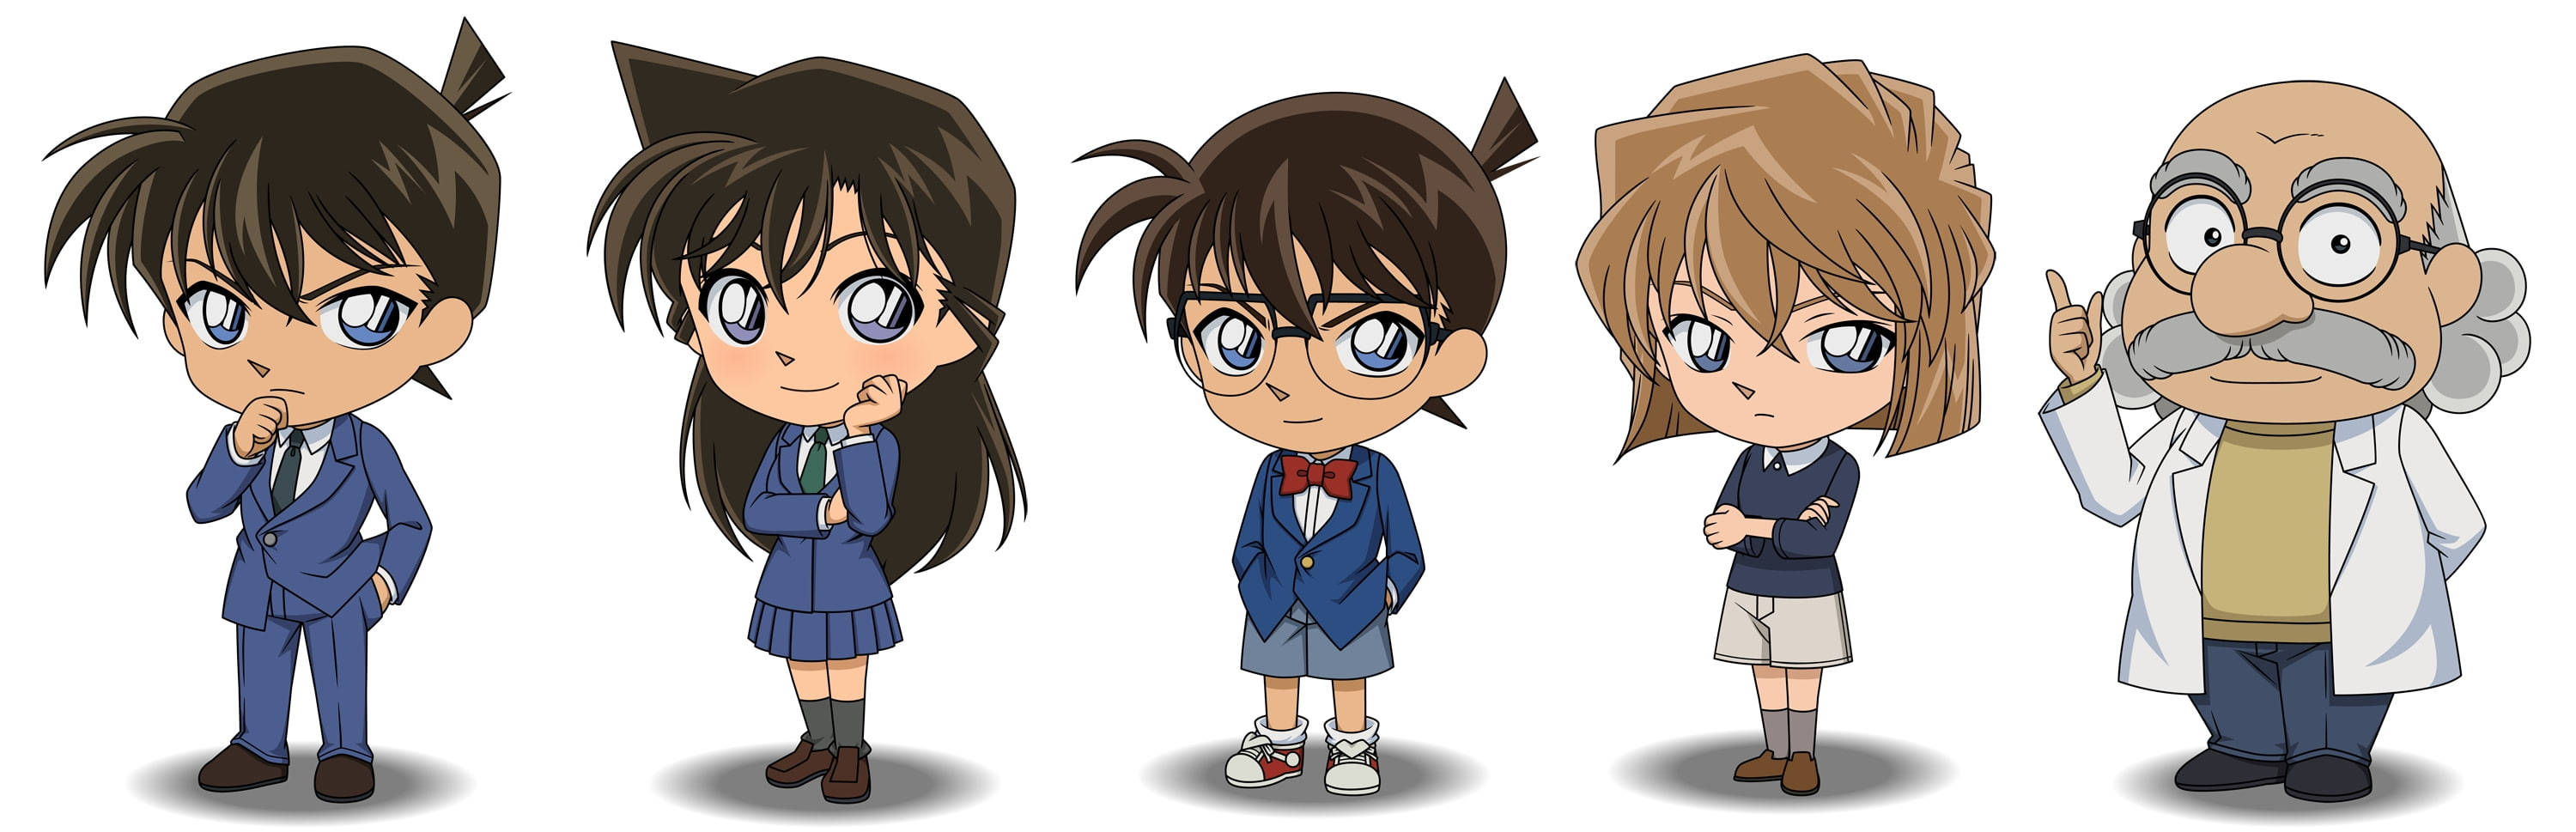 Detective Conan Chibi Characters